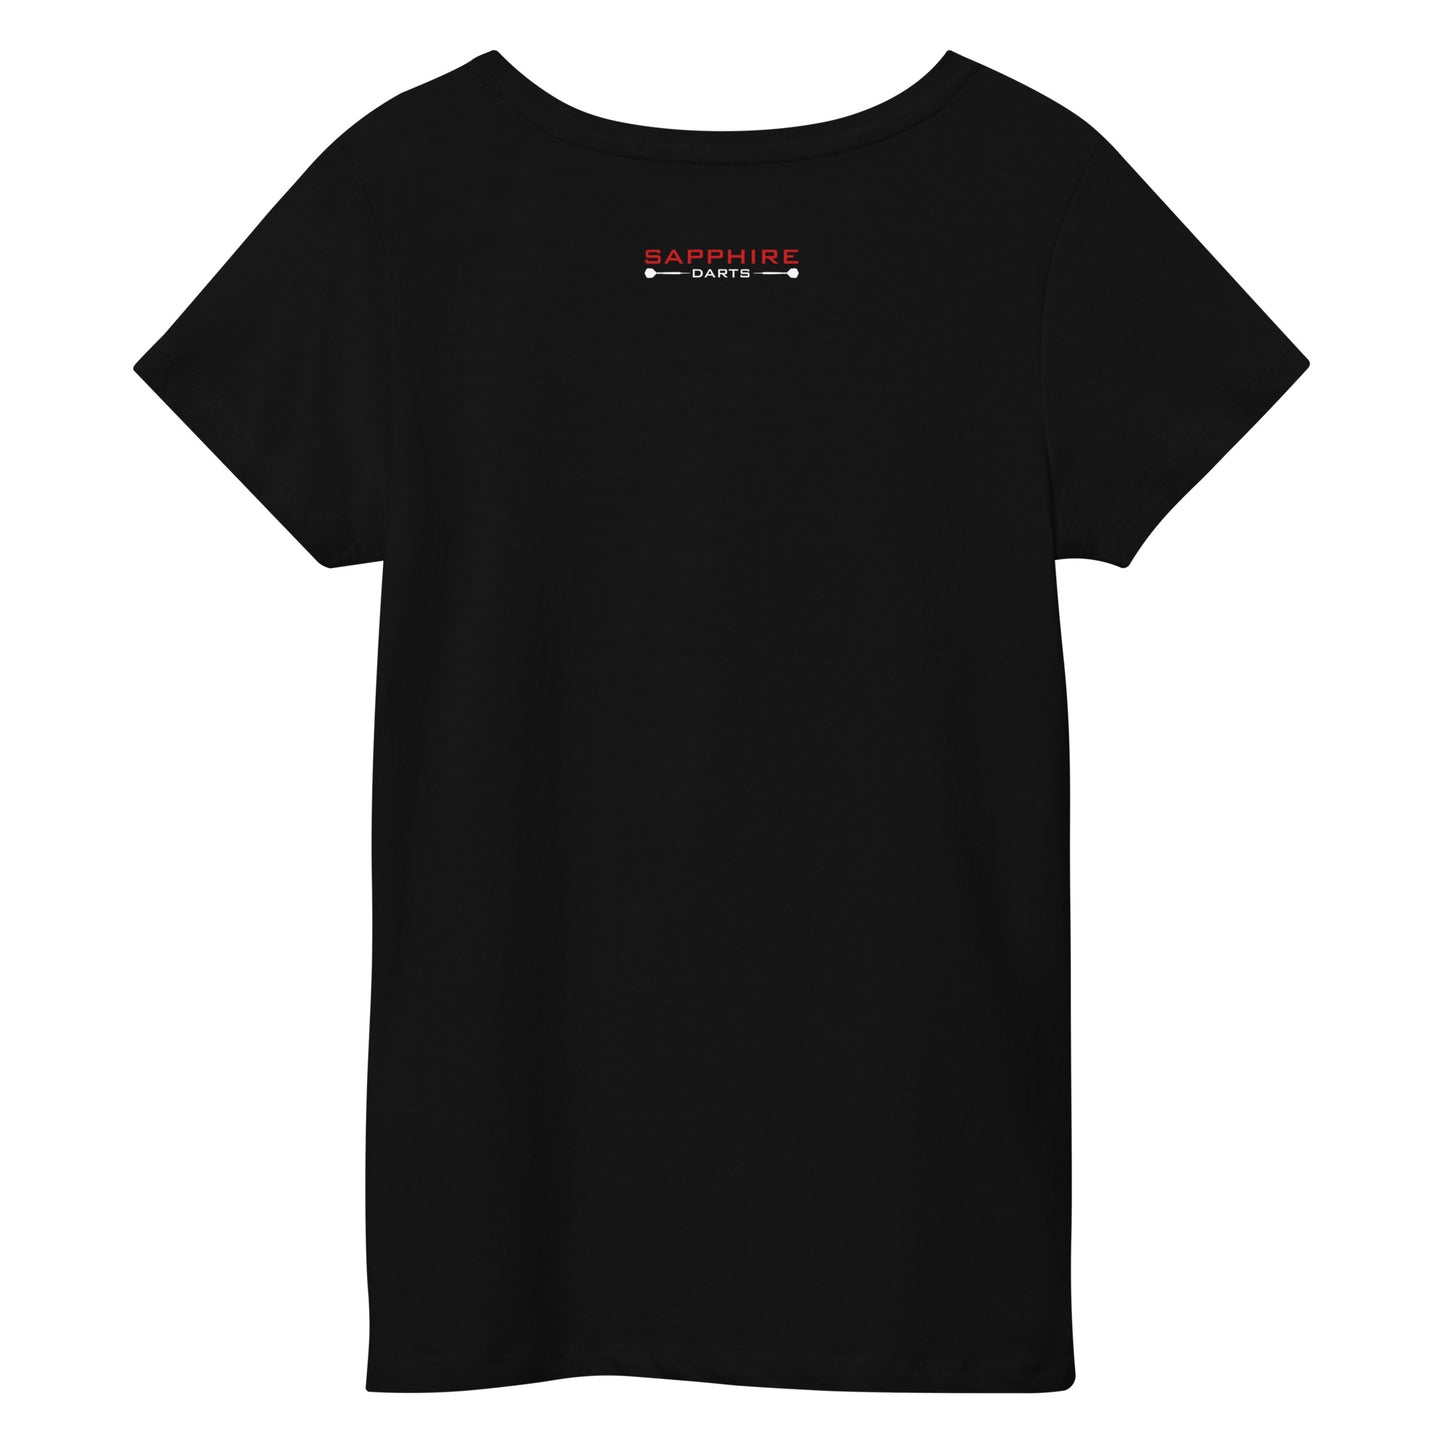 Basic Bio T-Shirt Damen XXX Grunge by Lupo